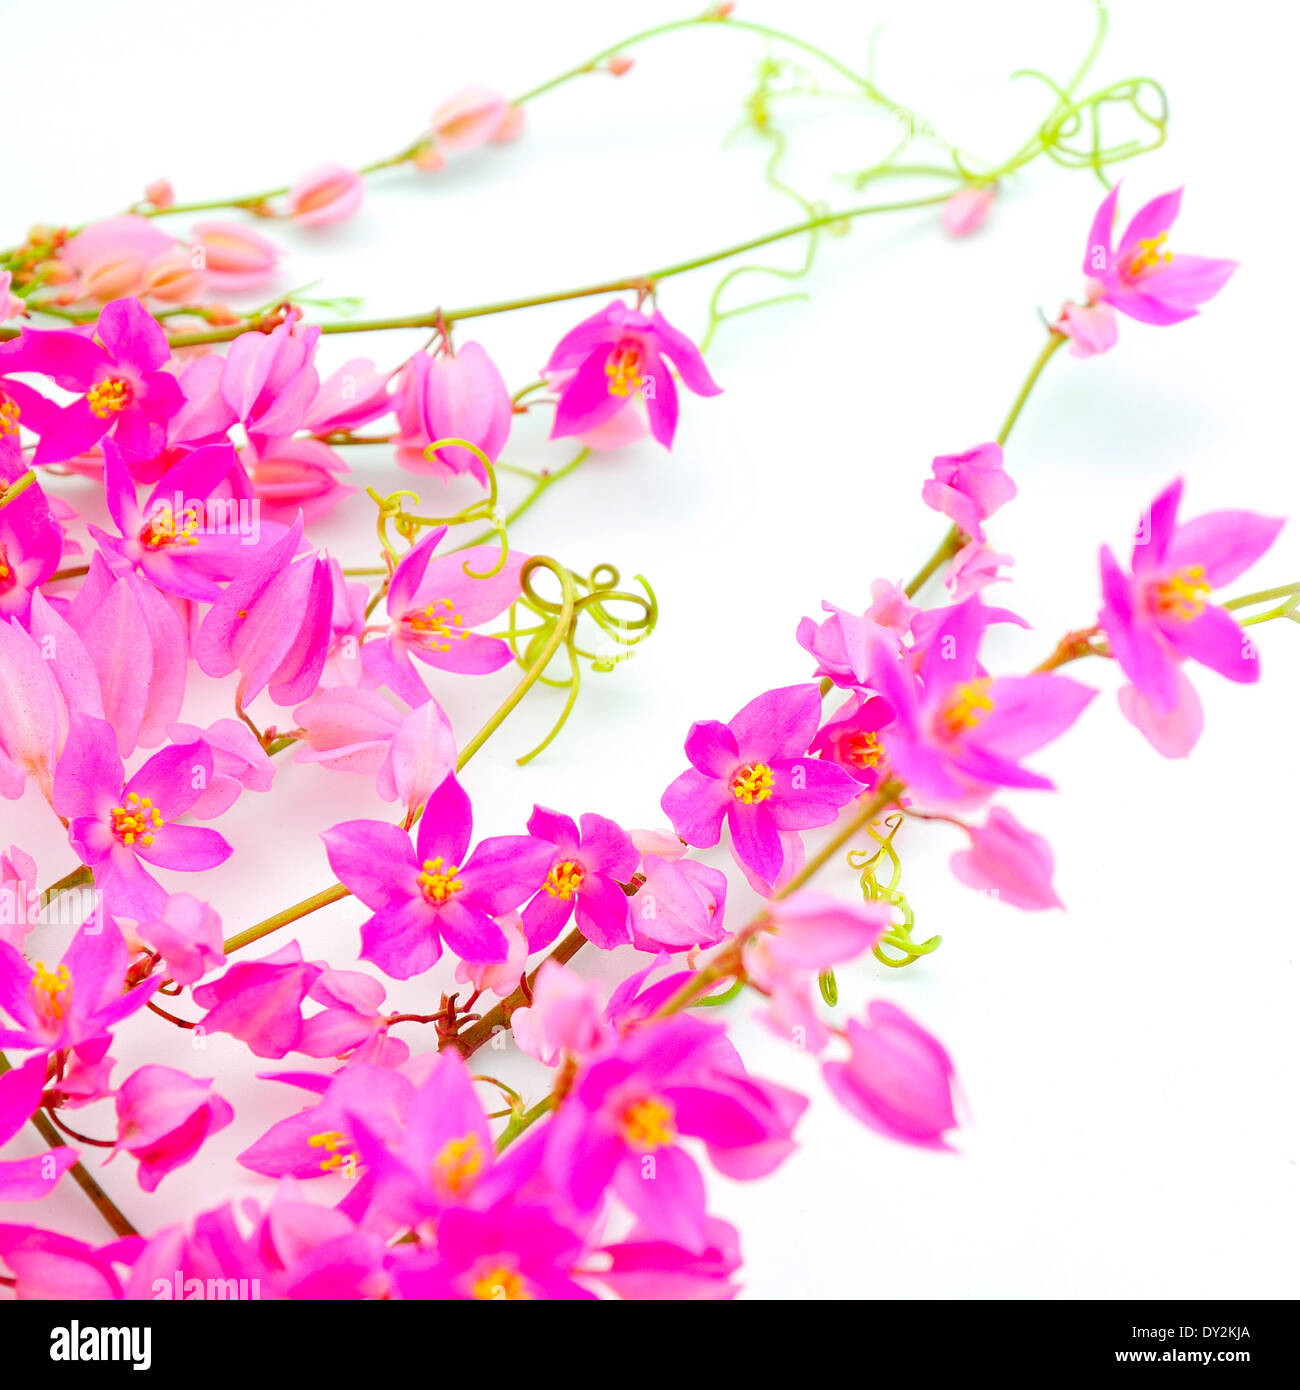 Antigonon leptopus or Pink Coral Vine, isolated on a white background Stock Photo